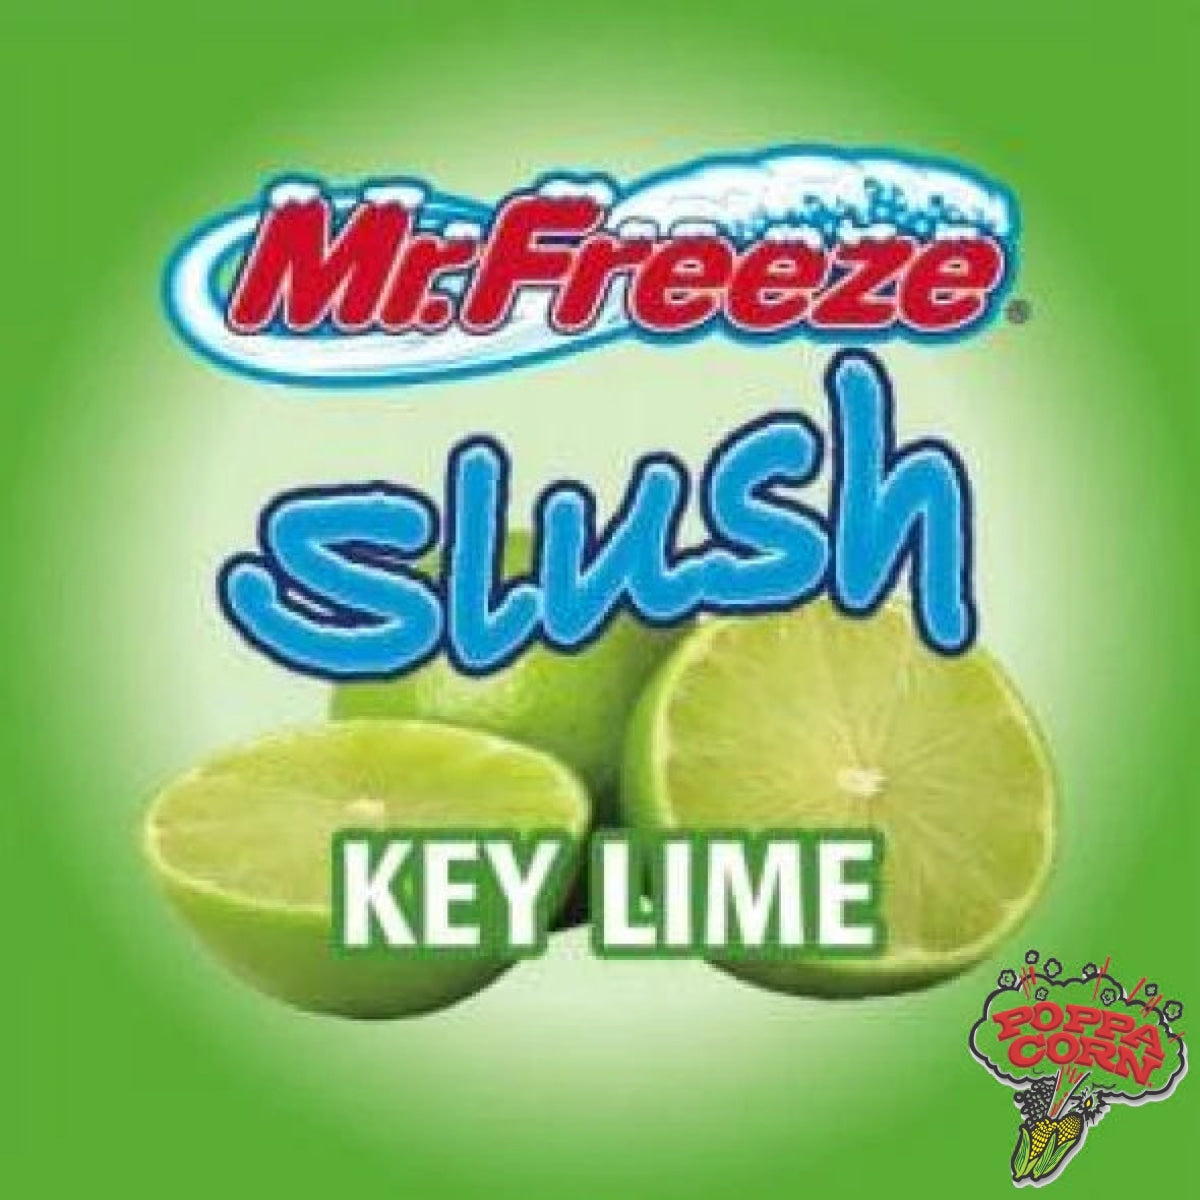 SLU107 - Key Lime - Mr. Freeze Slush Pouches - Bag in Box - Poppa Corn Corp